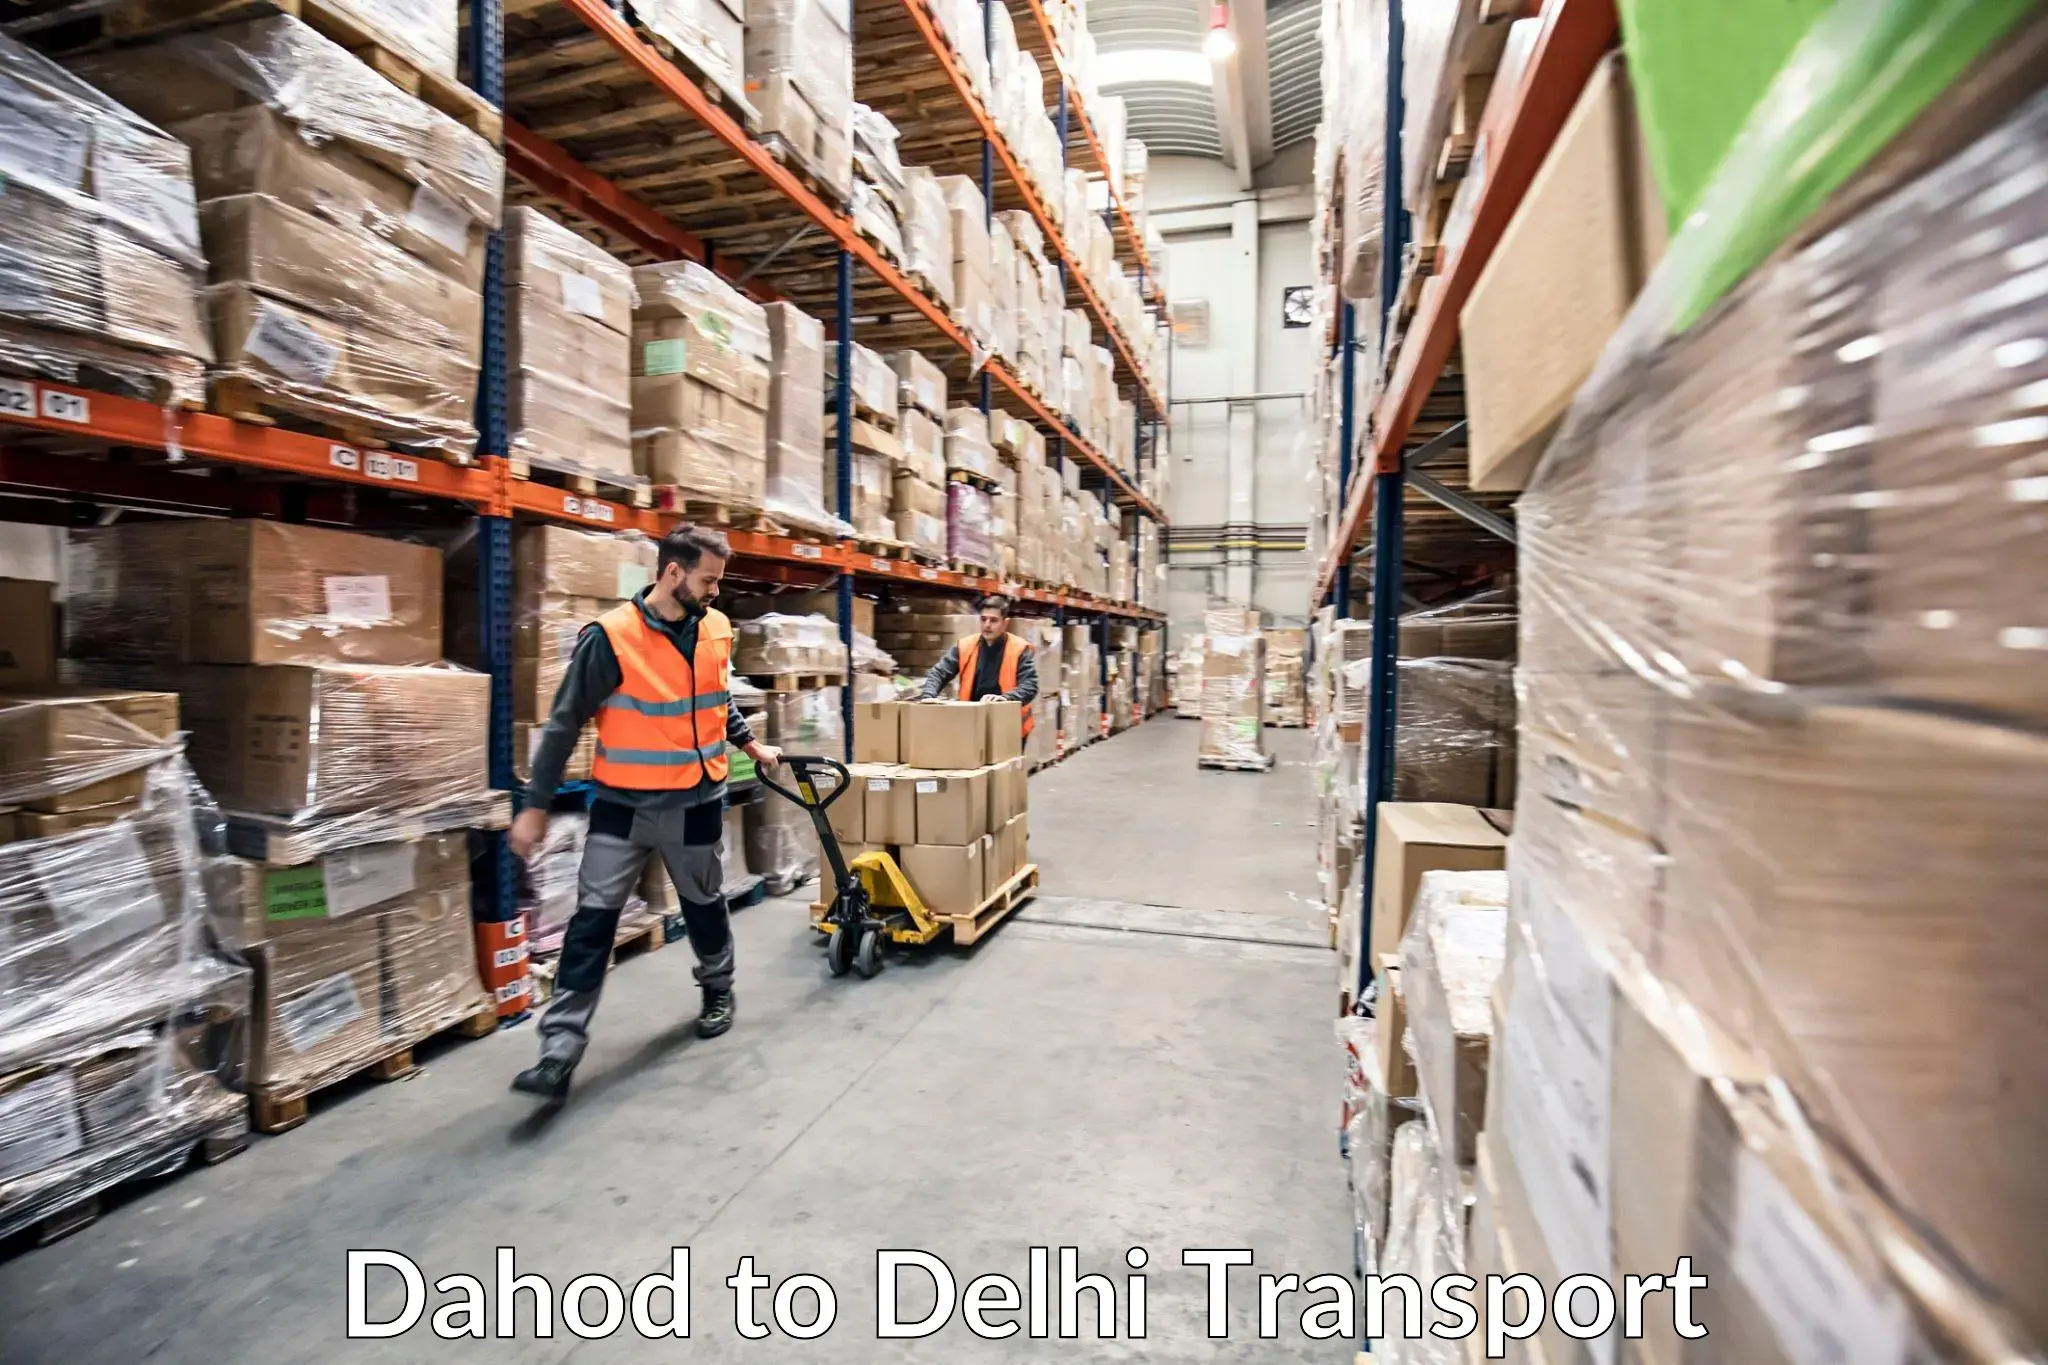 Shipping partner Dahod to Lodhi Road